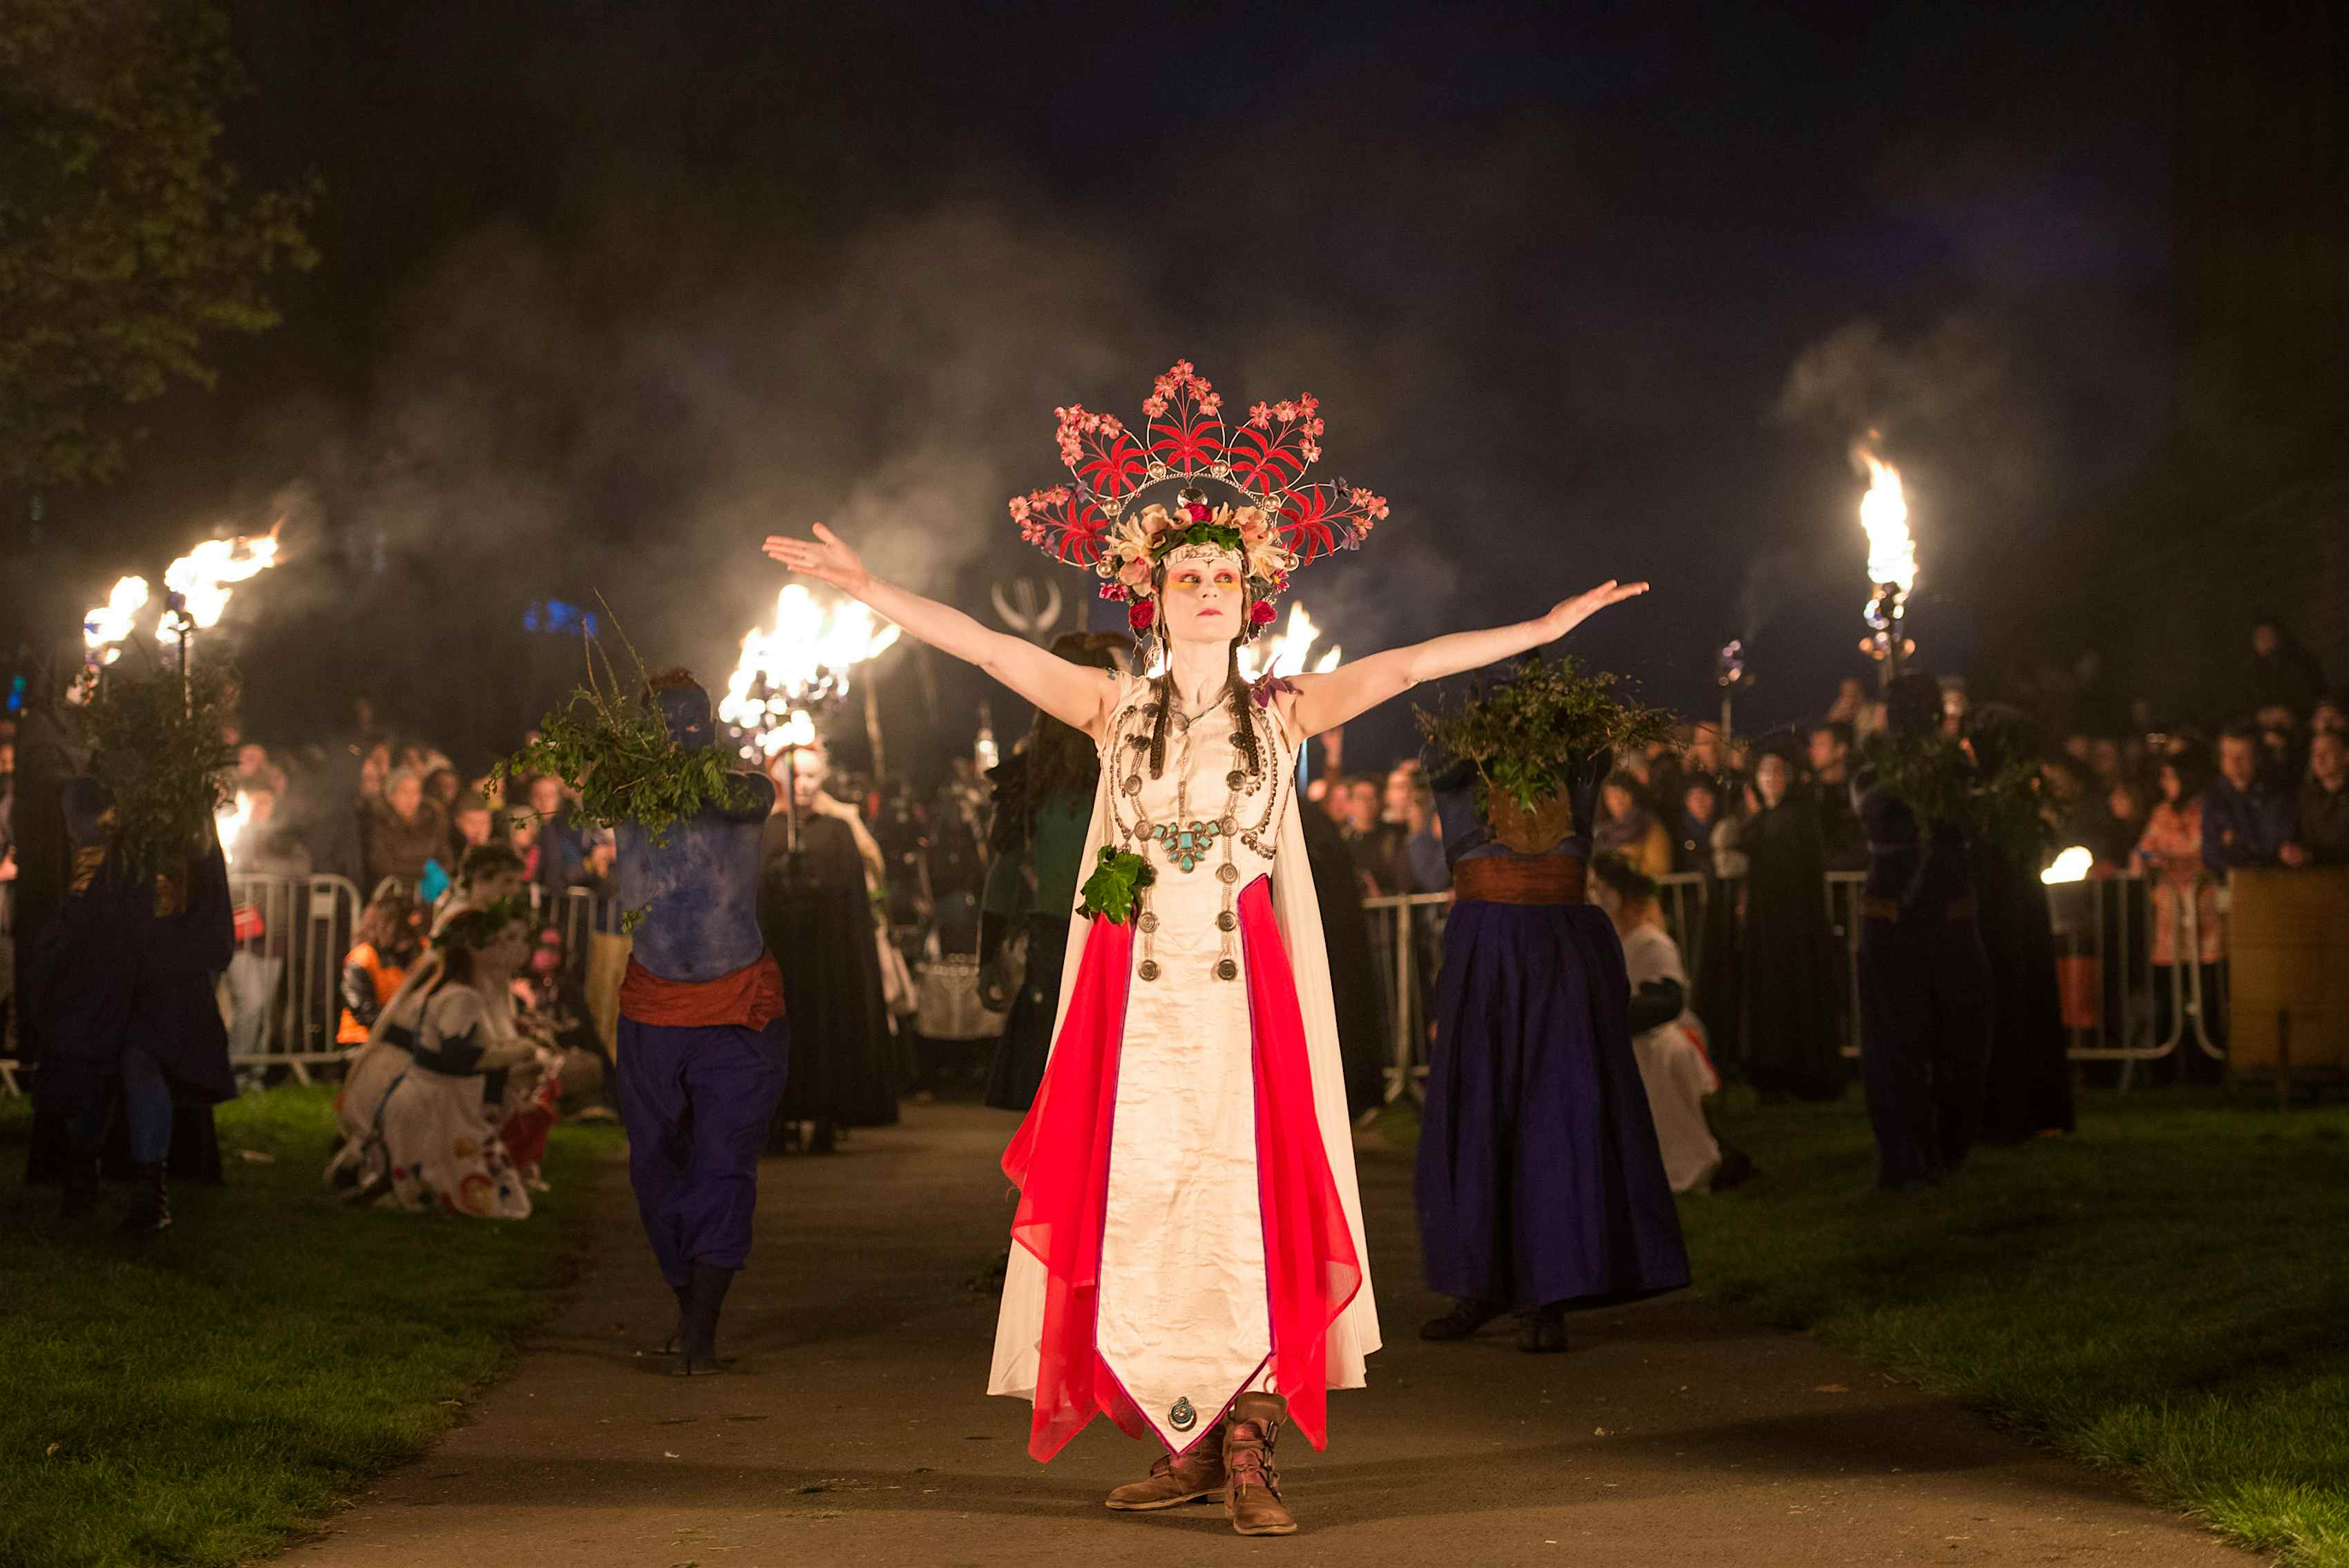 Edinburgh’s Beltane Fire Festival celebrates the rebirth of summer with